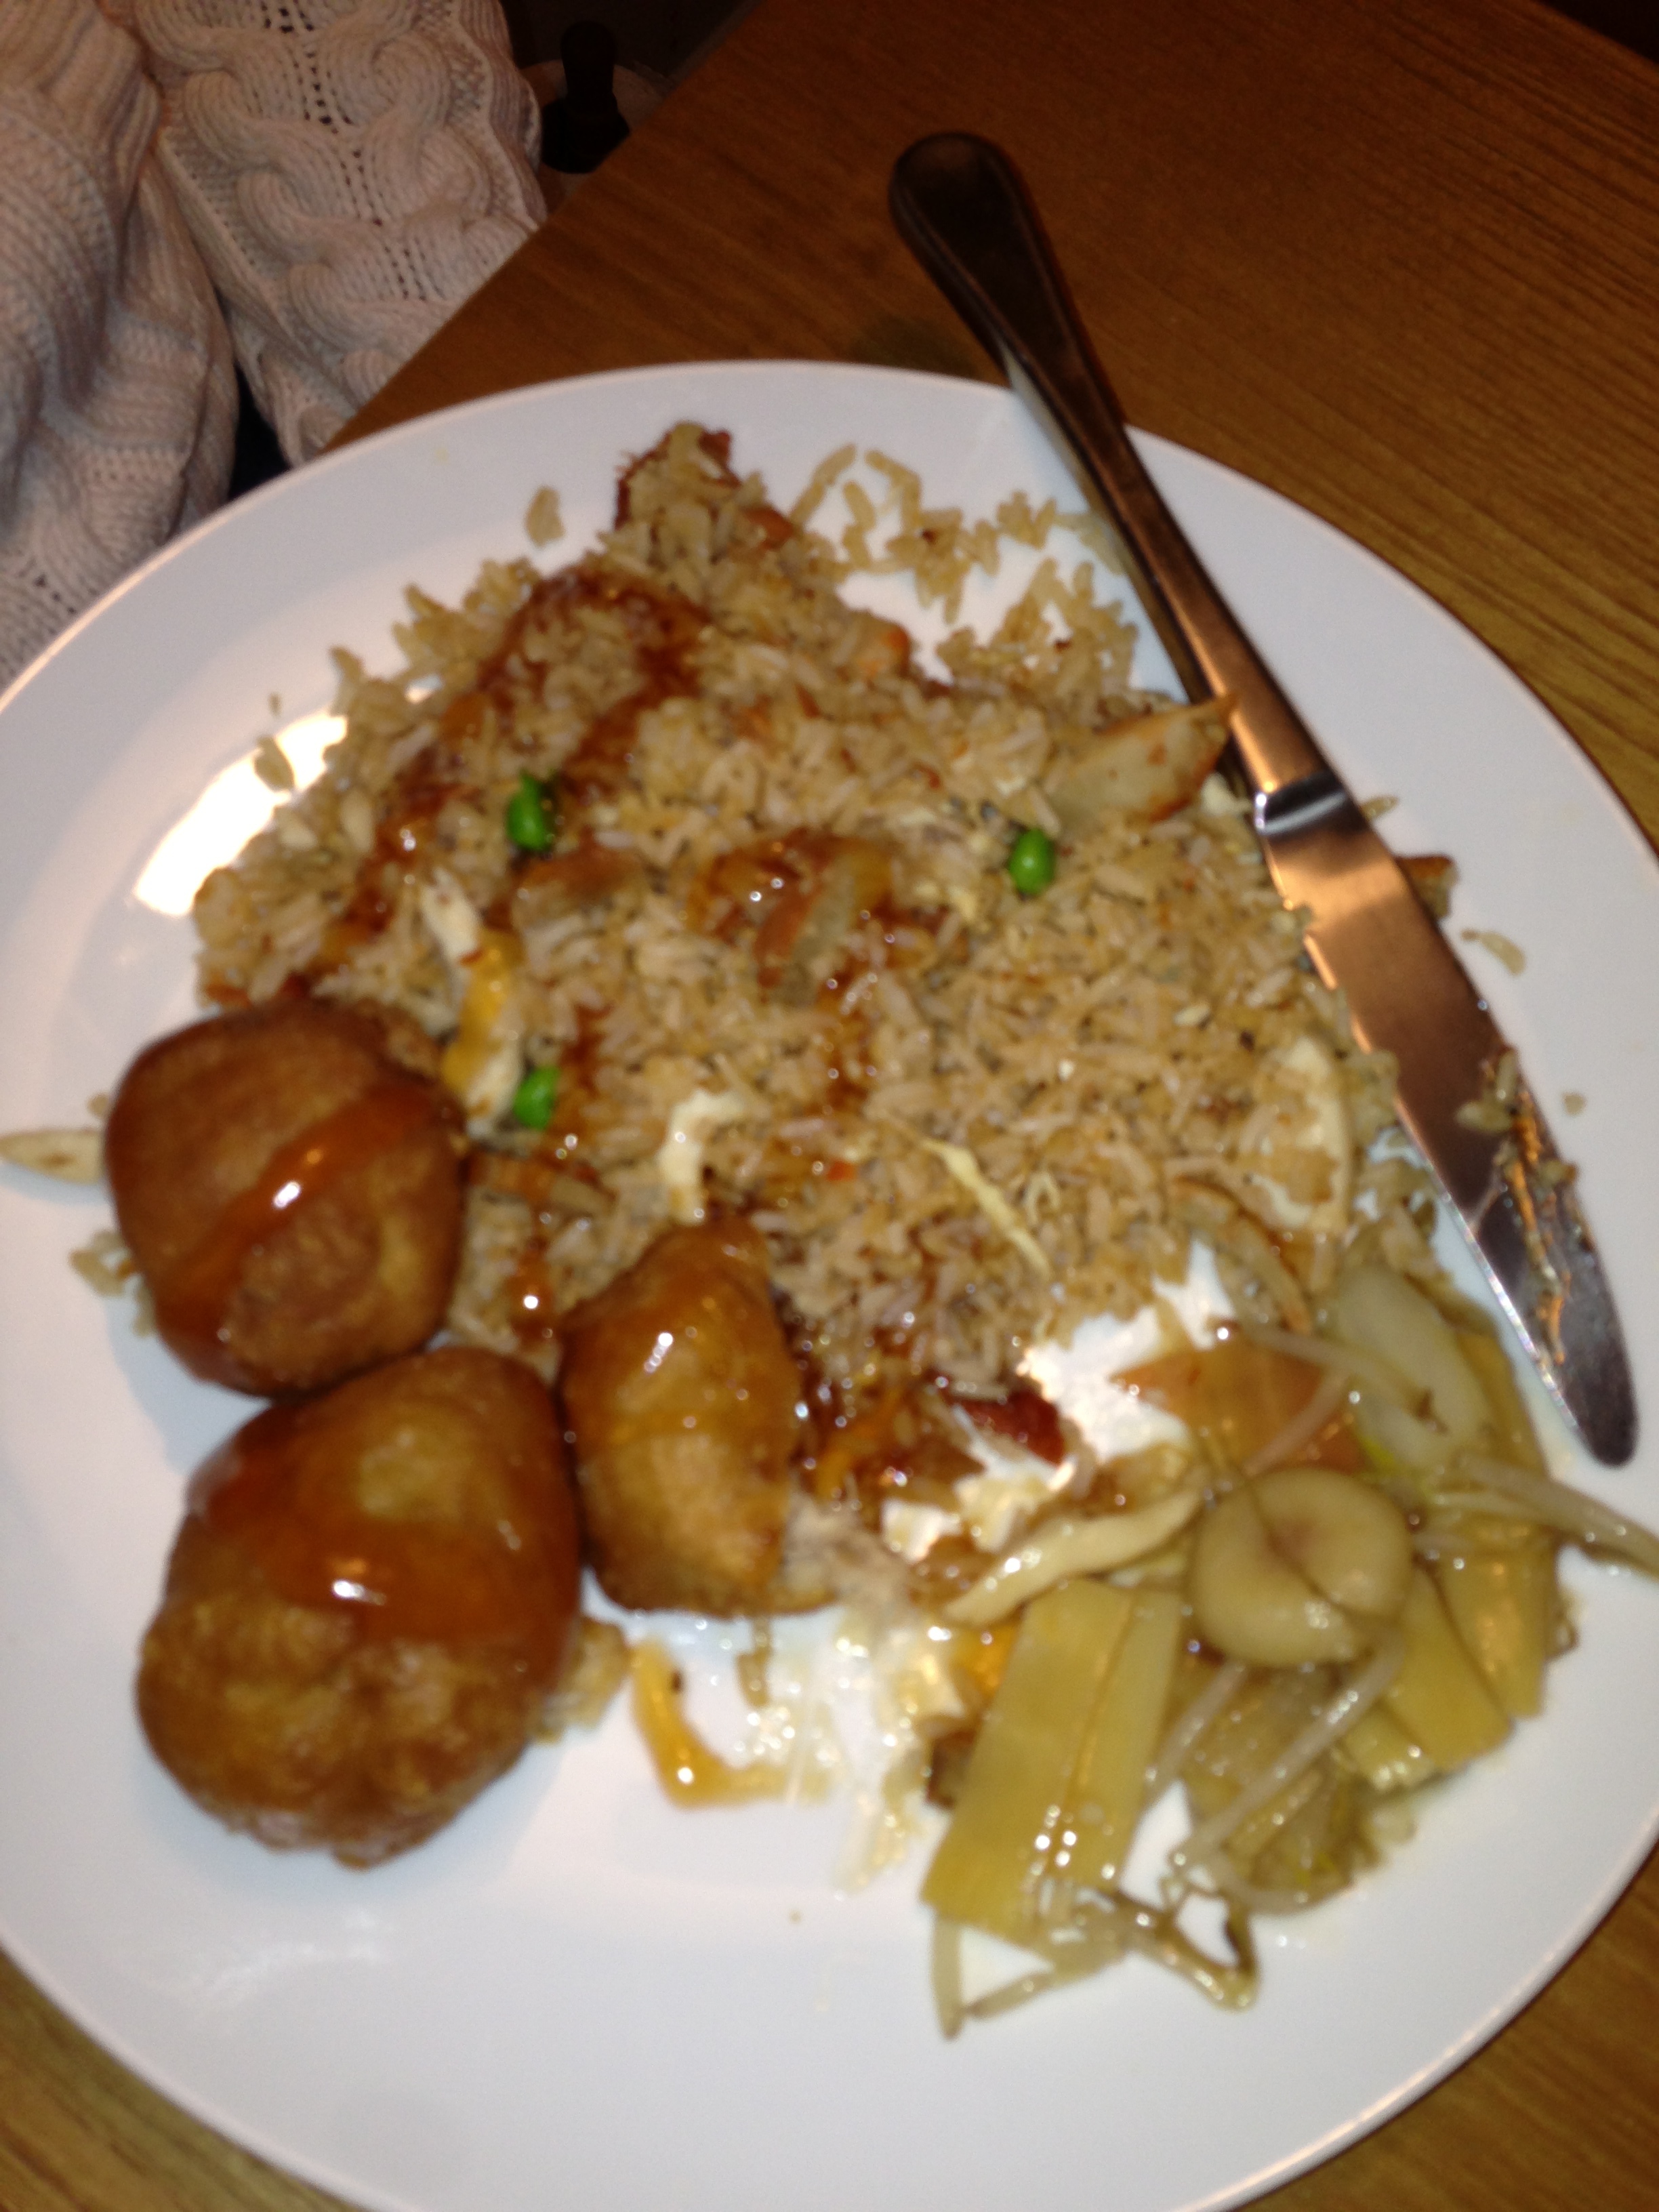  ​Pork balls, fried rice and veggies 